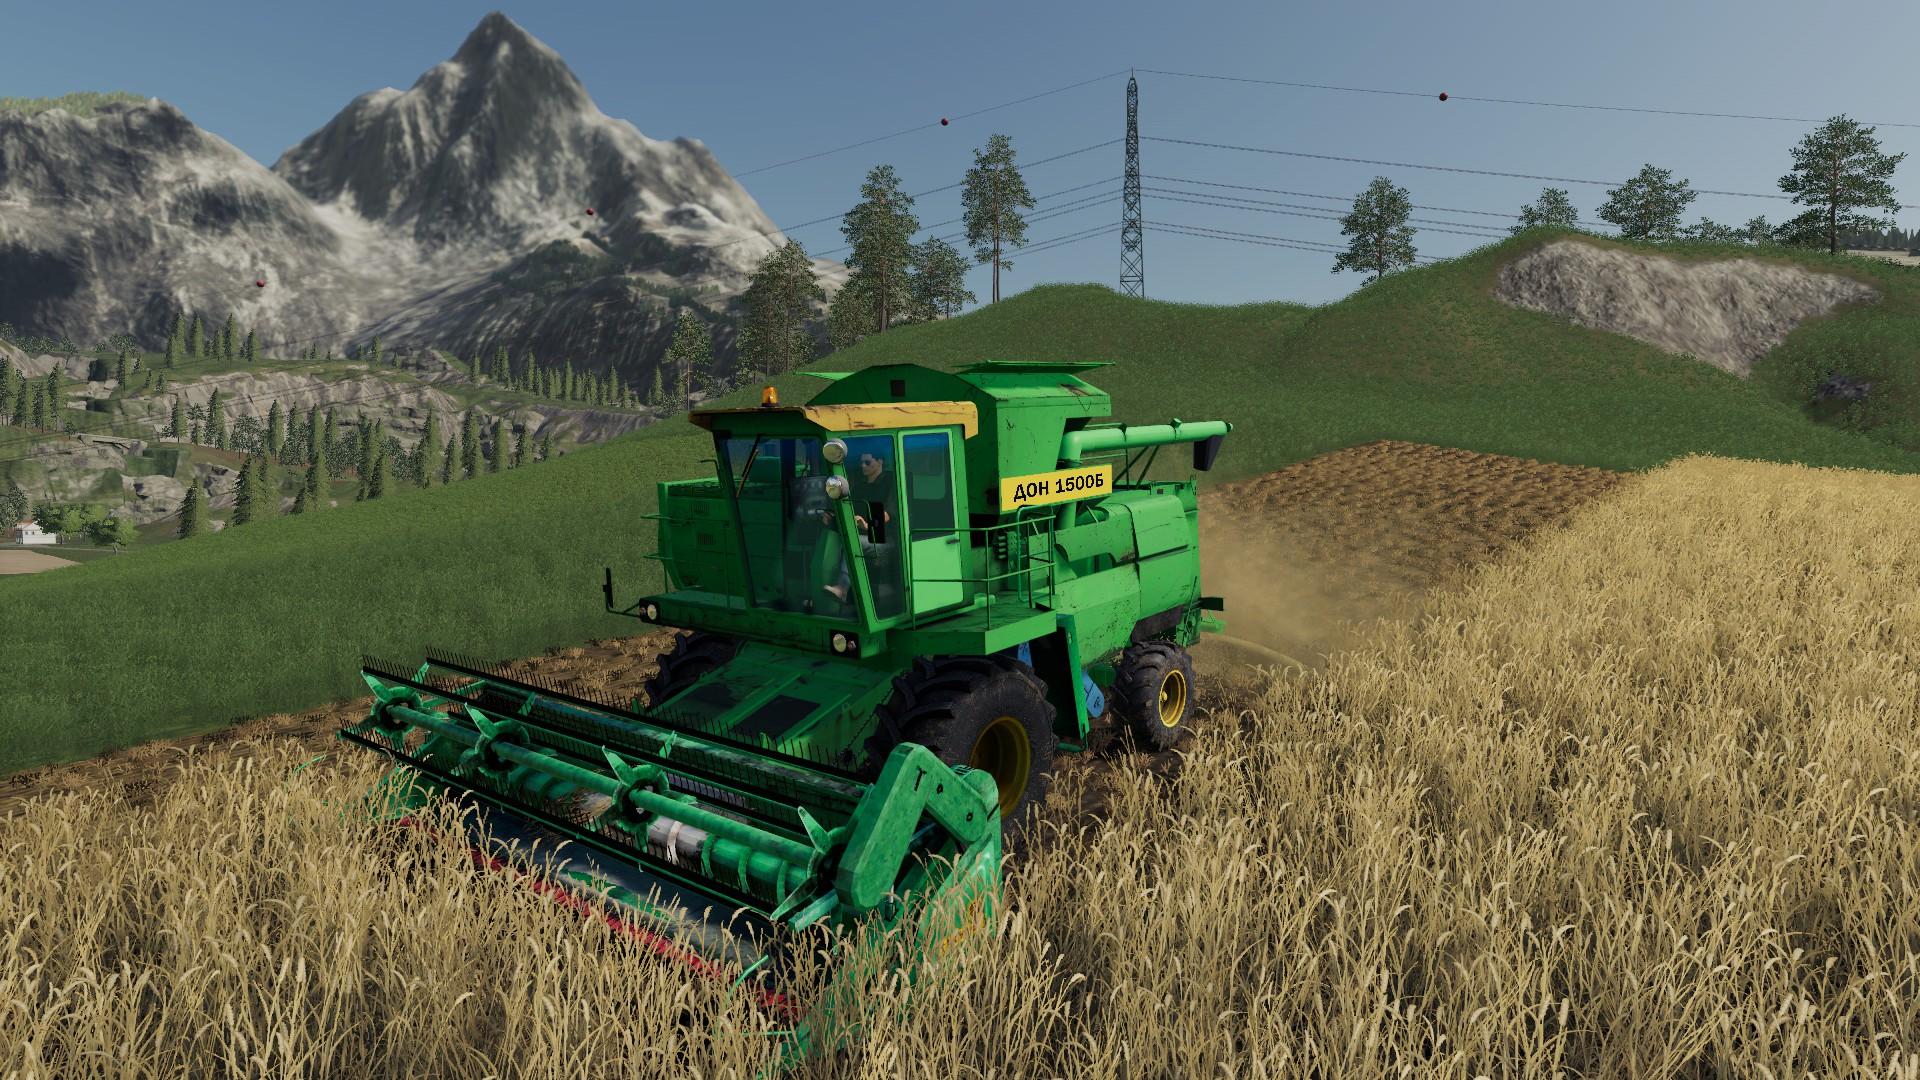 Игра симулятор farming. FS 19 Дон 1500. Farming Simulator 19. Дон 1500б для ФС 19. Дон-1500б fs22.